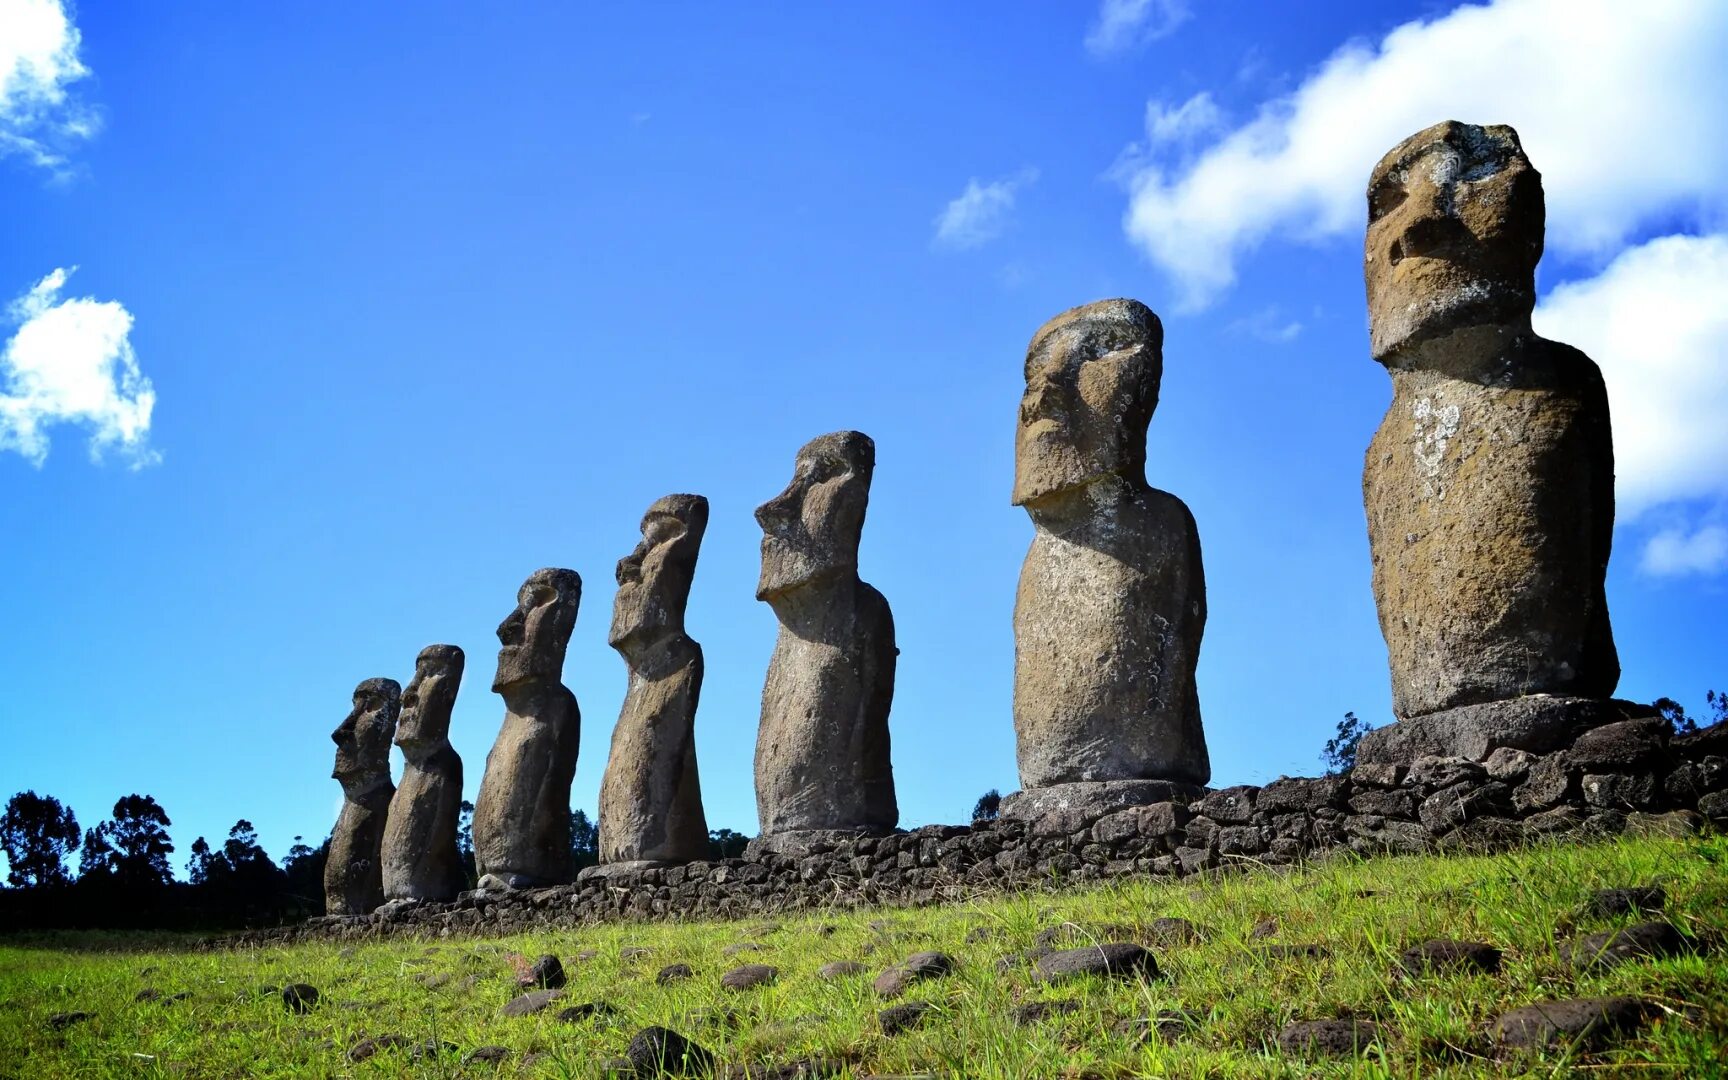 Моаи (статуи острова Пасхи), Чили. Чили остров Пасхи, Чили Моаи. Каменные истуканы острова Пасхи. Остров Пасхи статуи Моаи.